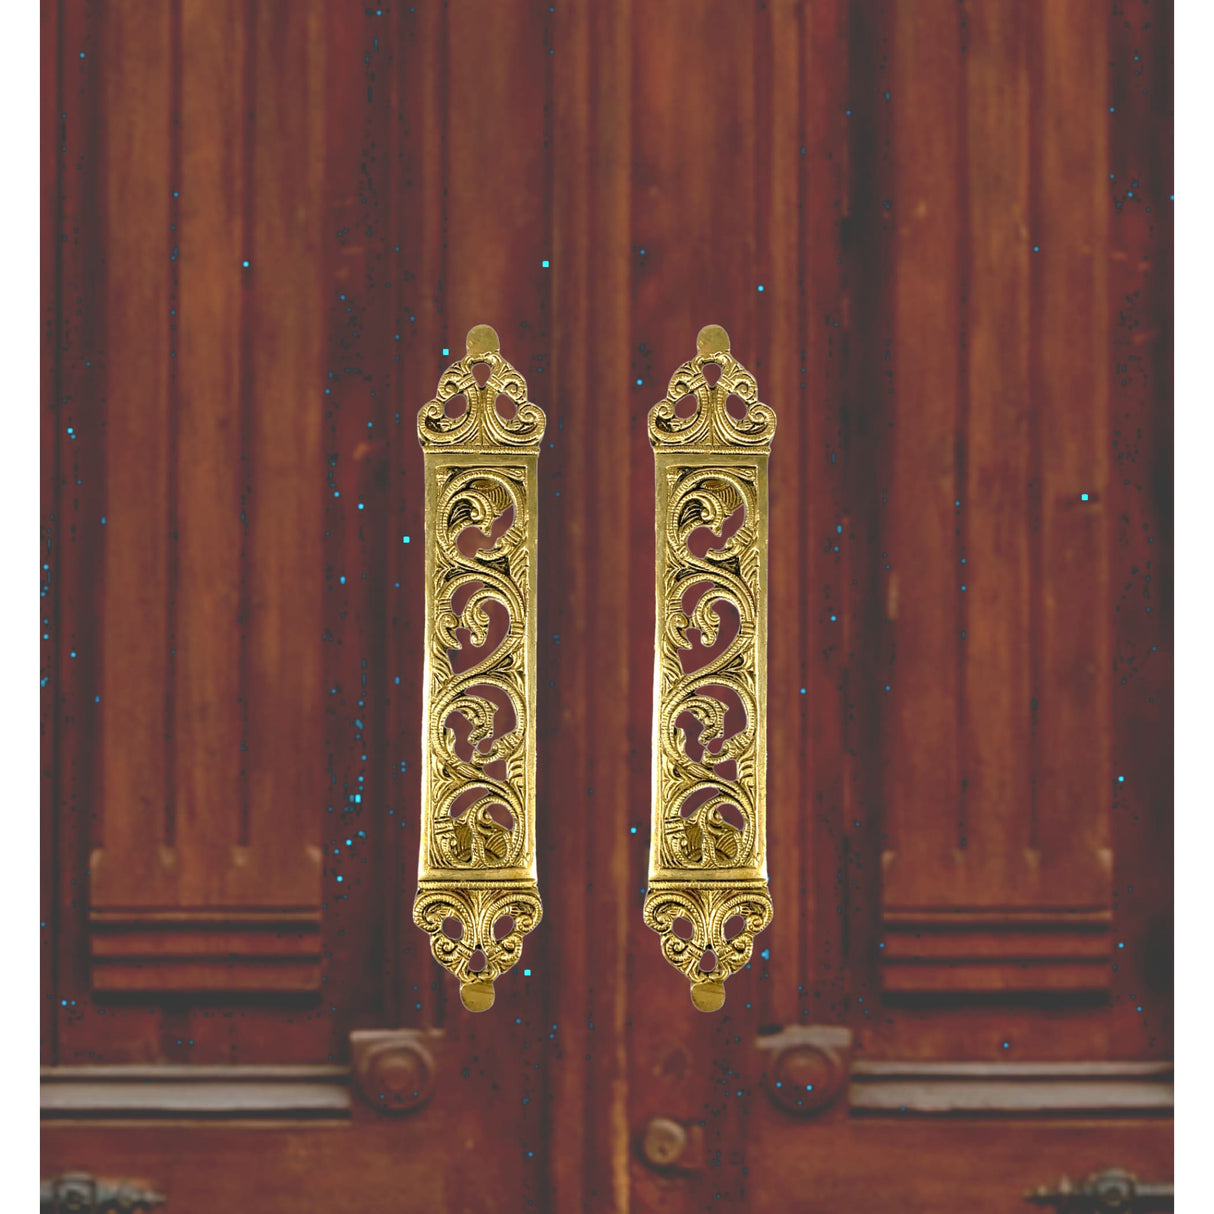 Designer door pull handles antique design 11.7 inches brass